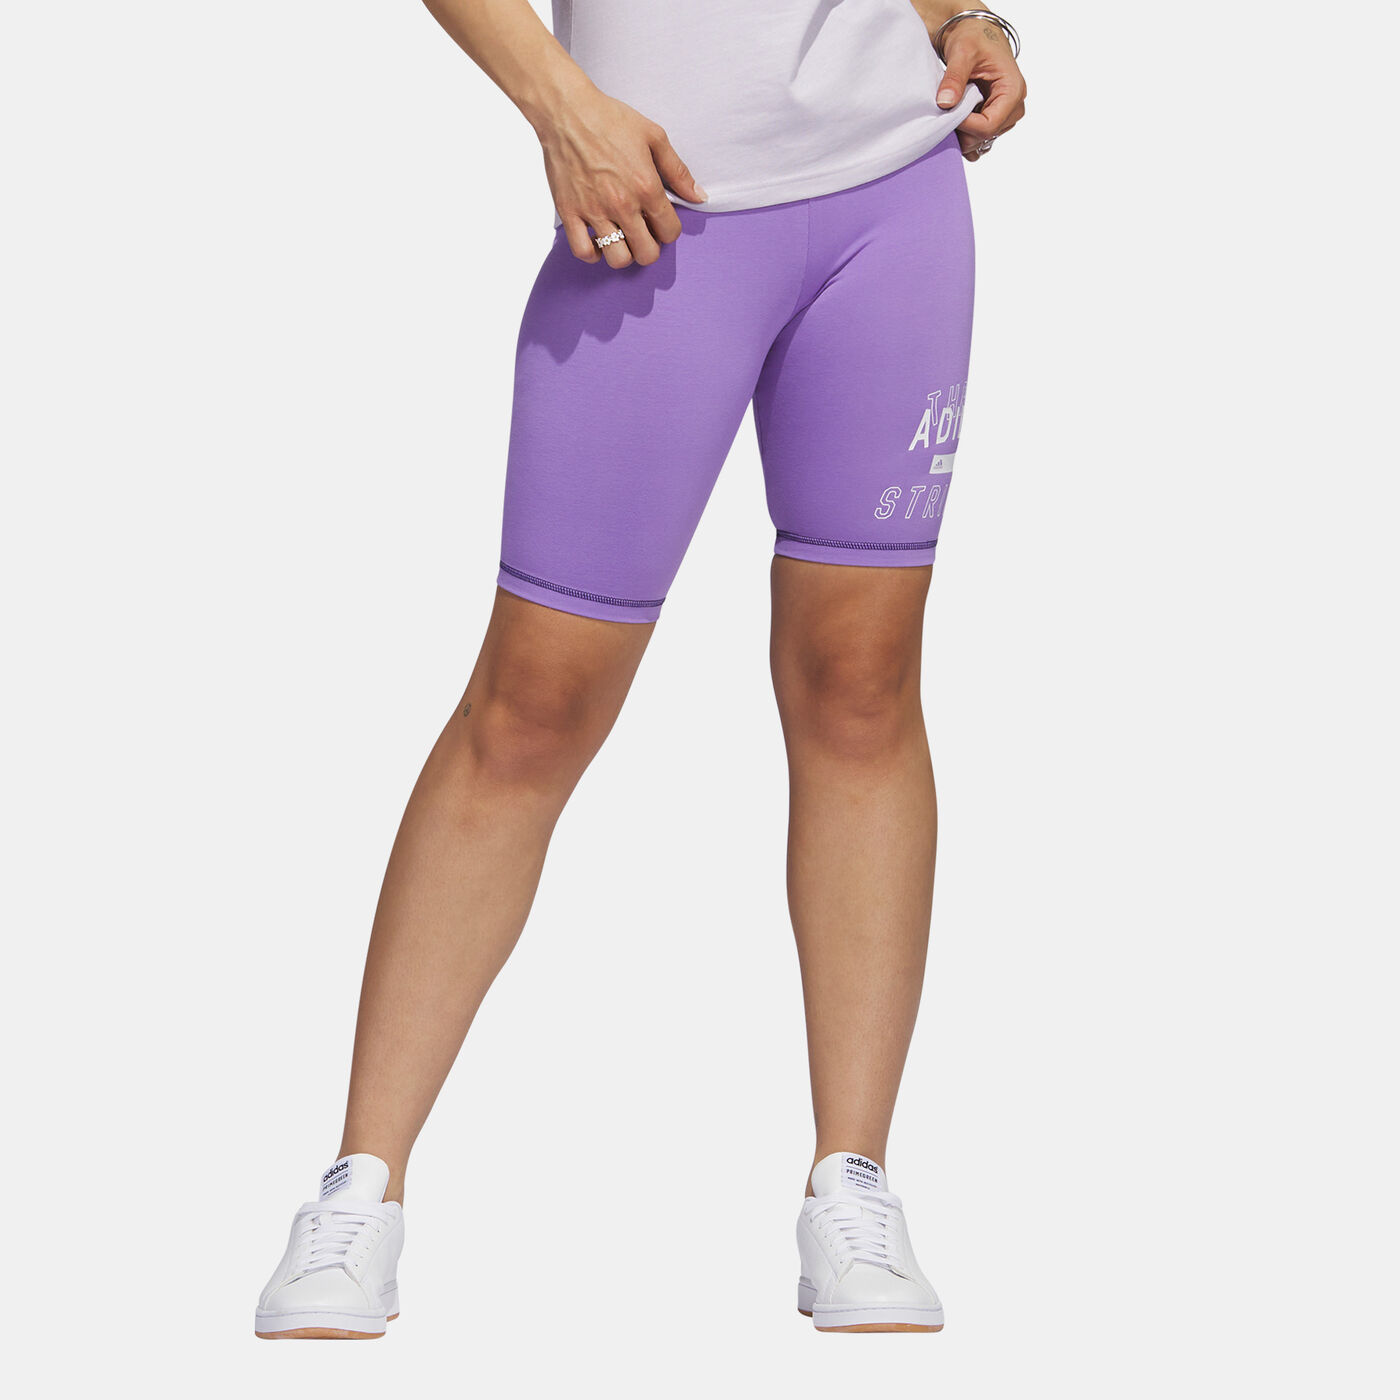 Women's Sport Statement Bike Shorts